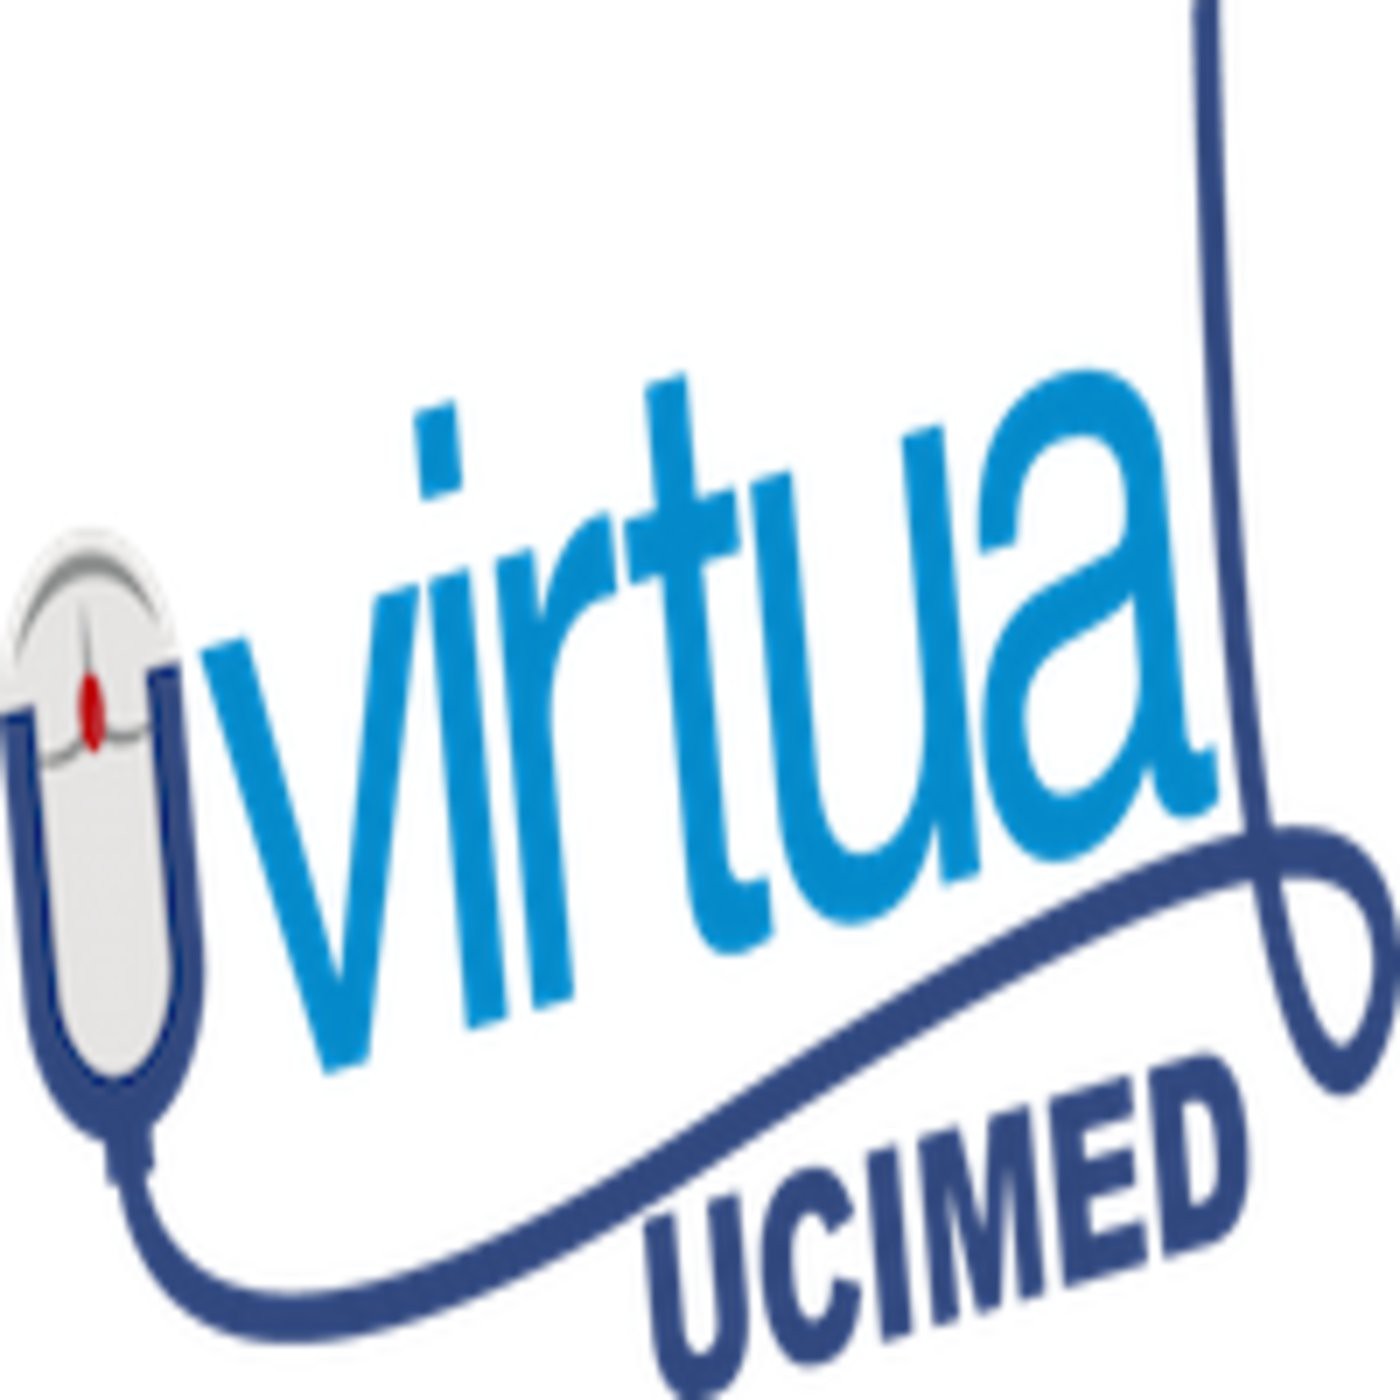 Uvirtual UCIMED